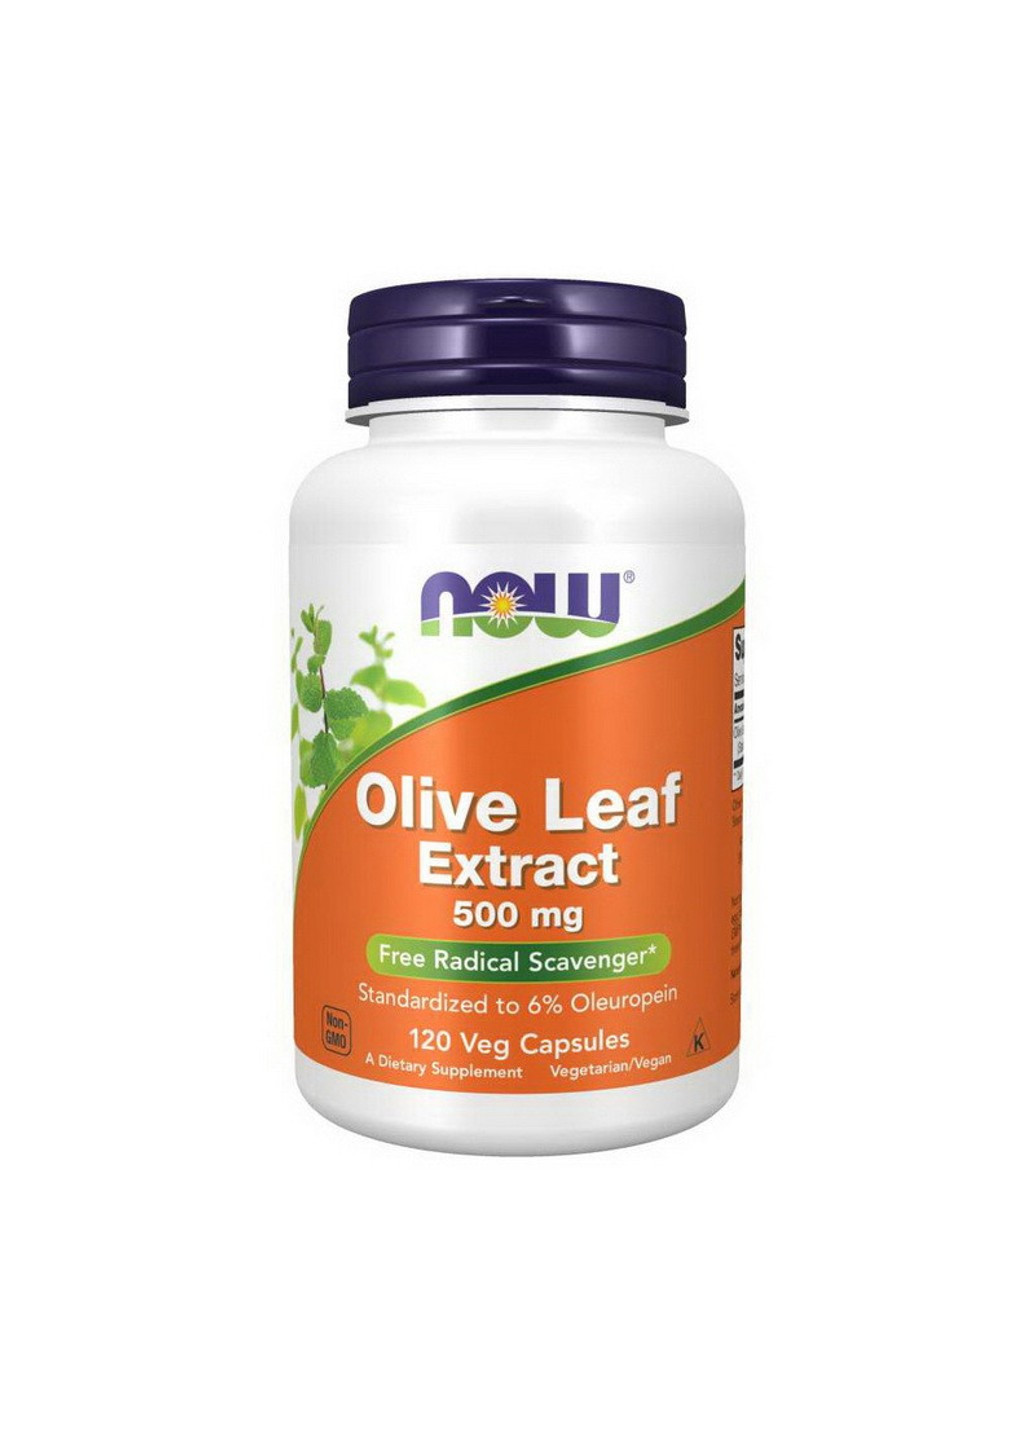 Екстракт з листя оливкового дерева Olive Leaf Extract 500 mg (120 капс) нау фудс Now Foods (255410459)